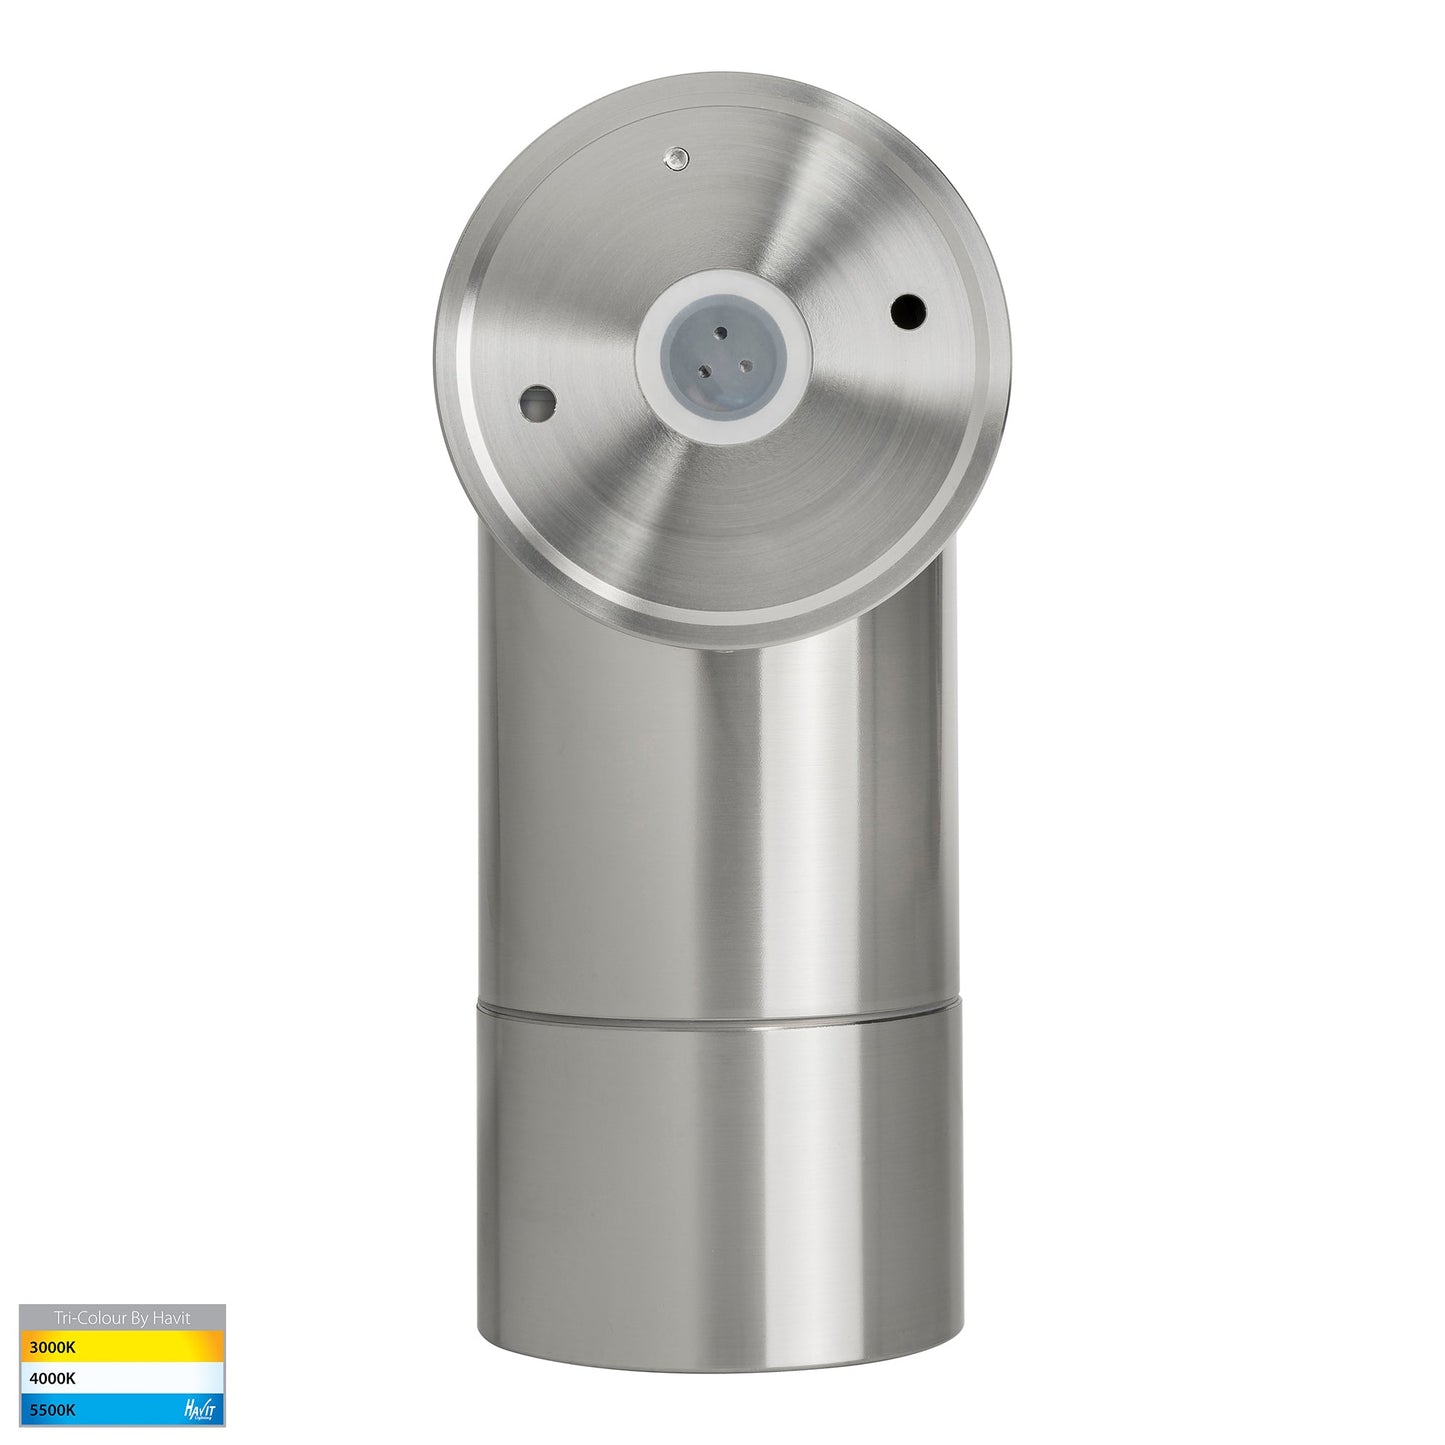 Single Adjustable Wall Pillar Light 316 Stainless Steel  HV1208t